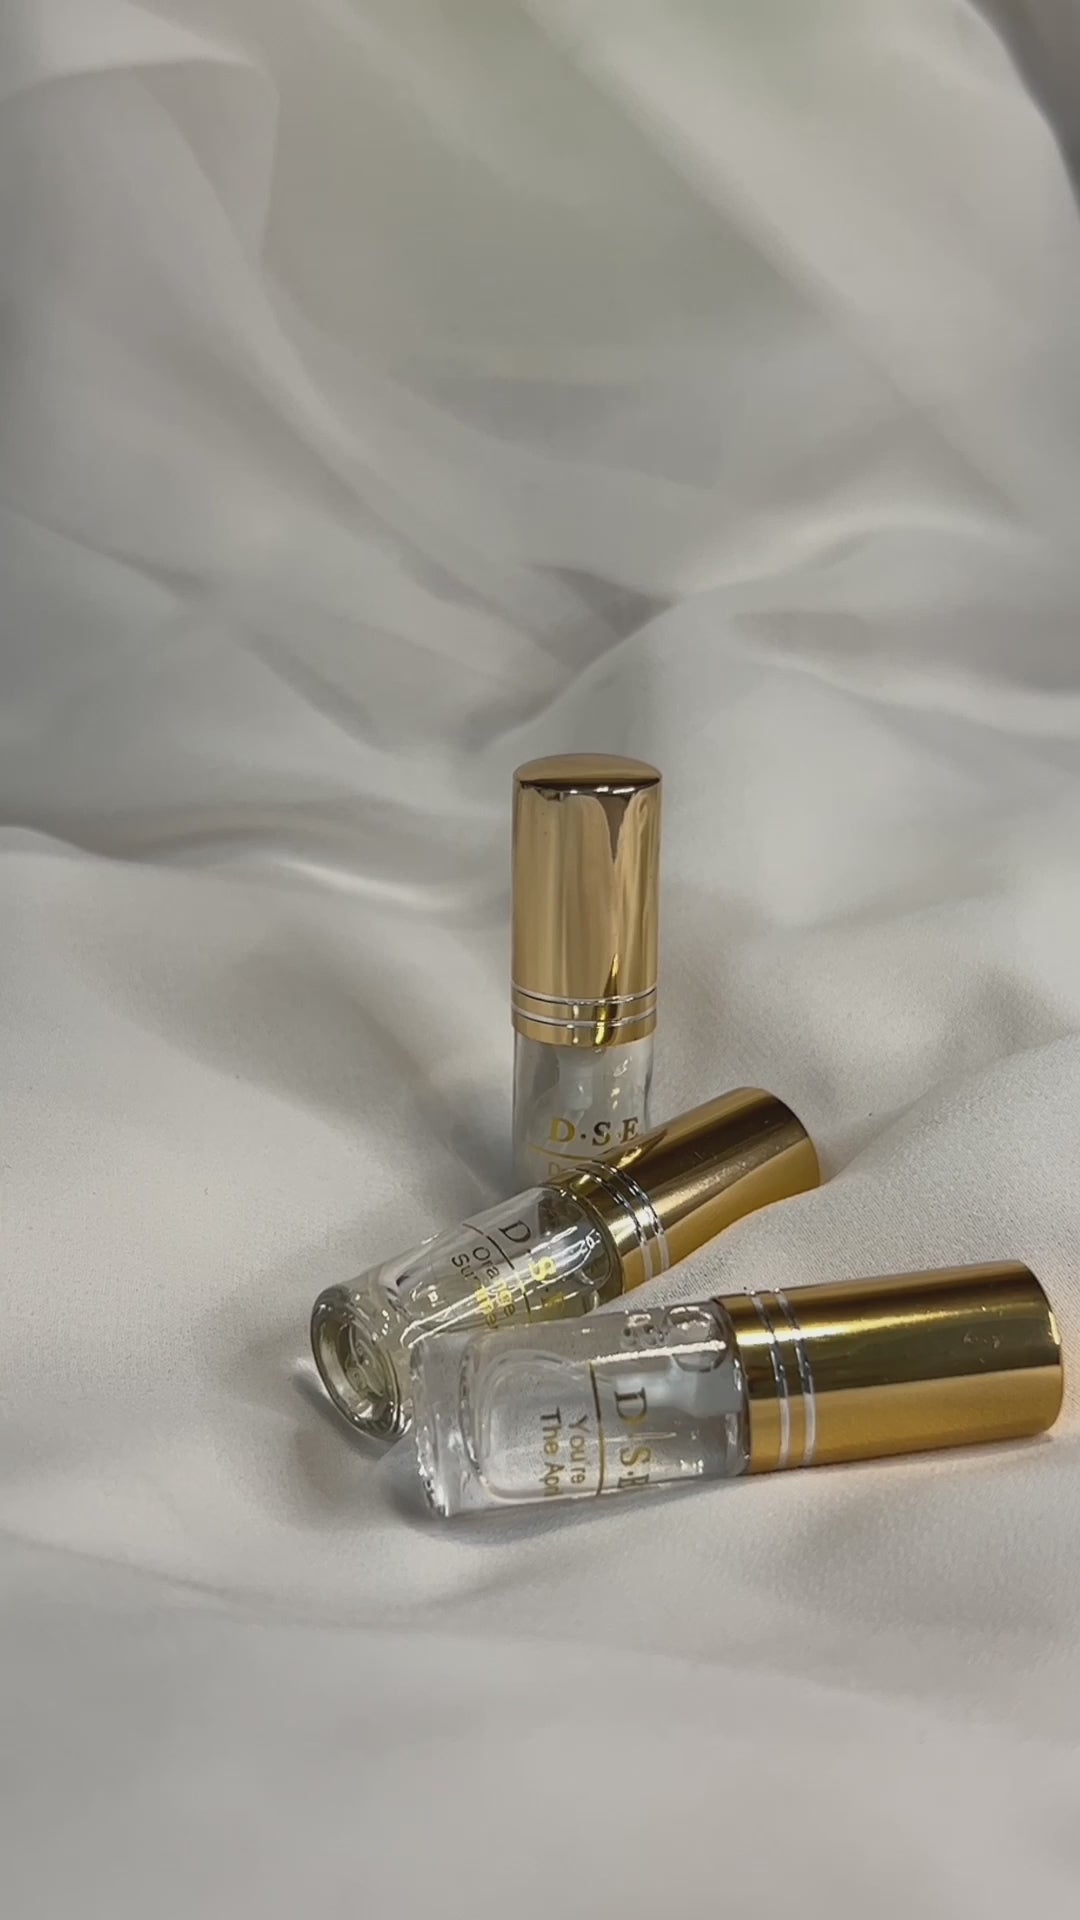 DSE Fragrances essential oil perfume